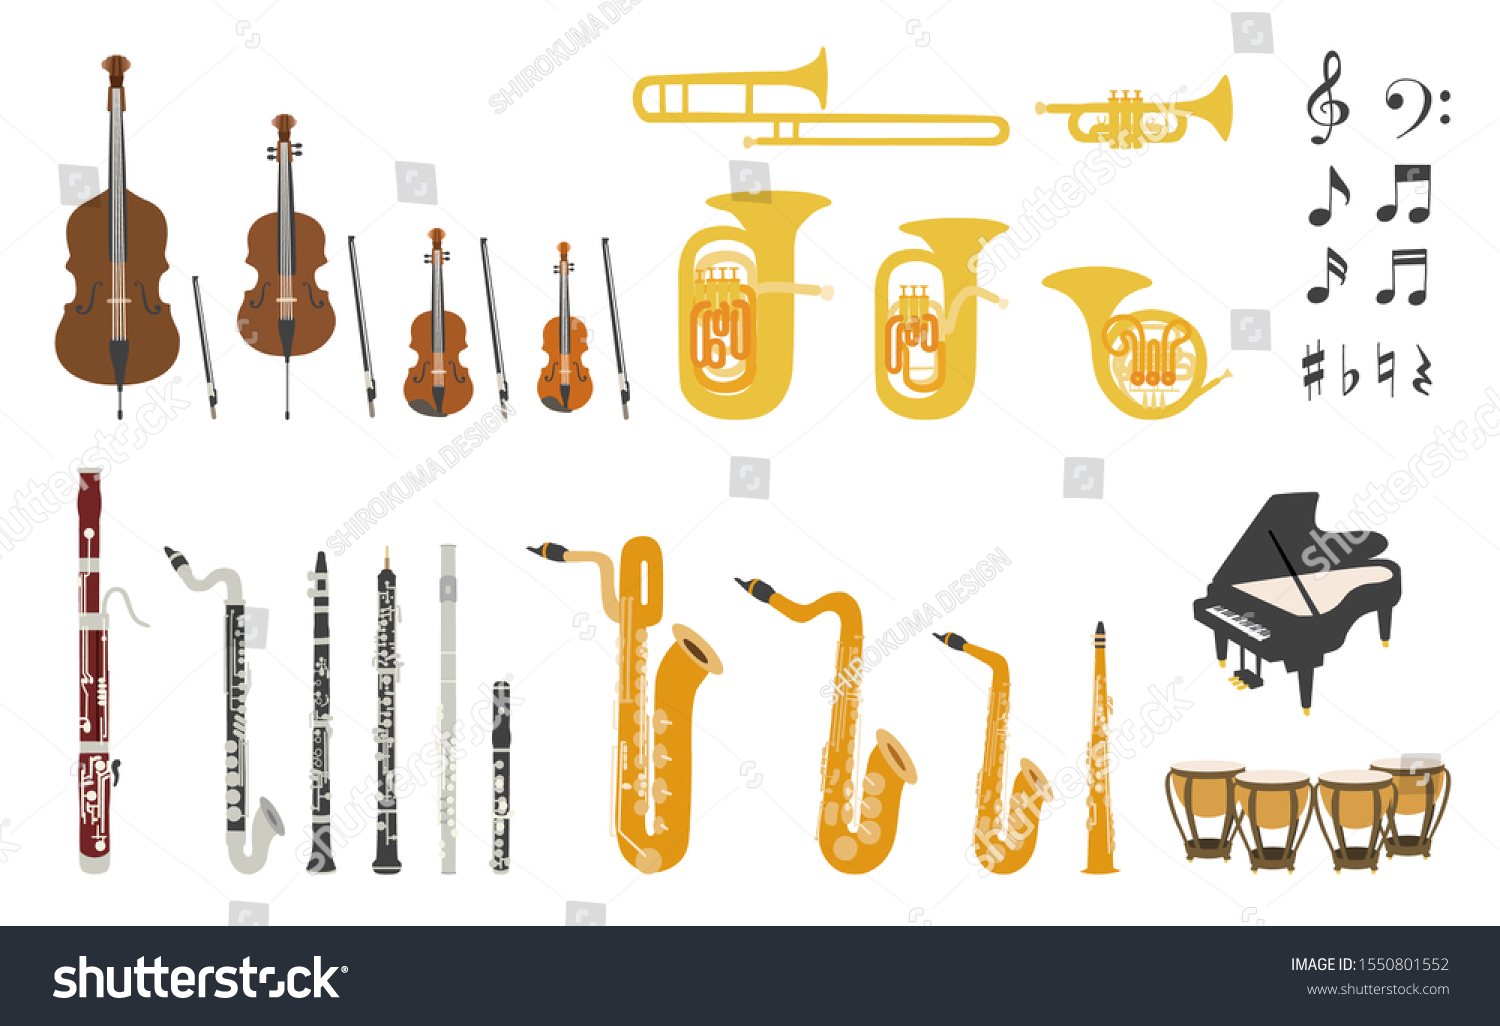 164 Baritone clarinet Images, Stock Photos & Vectors | Shutterstock